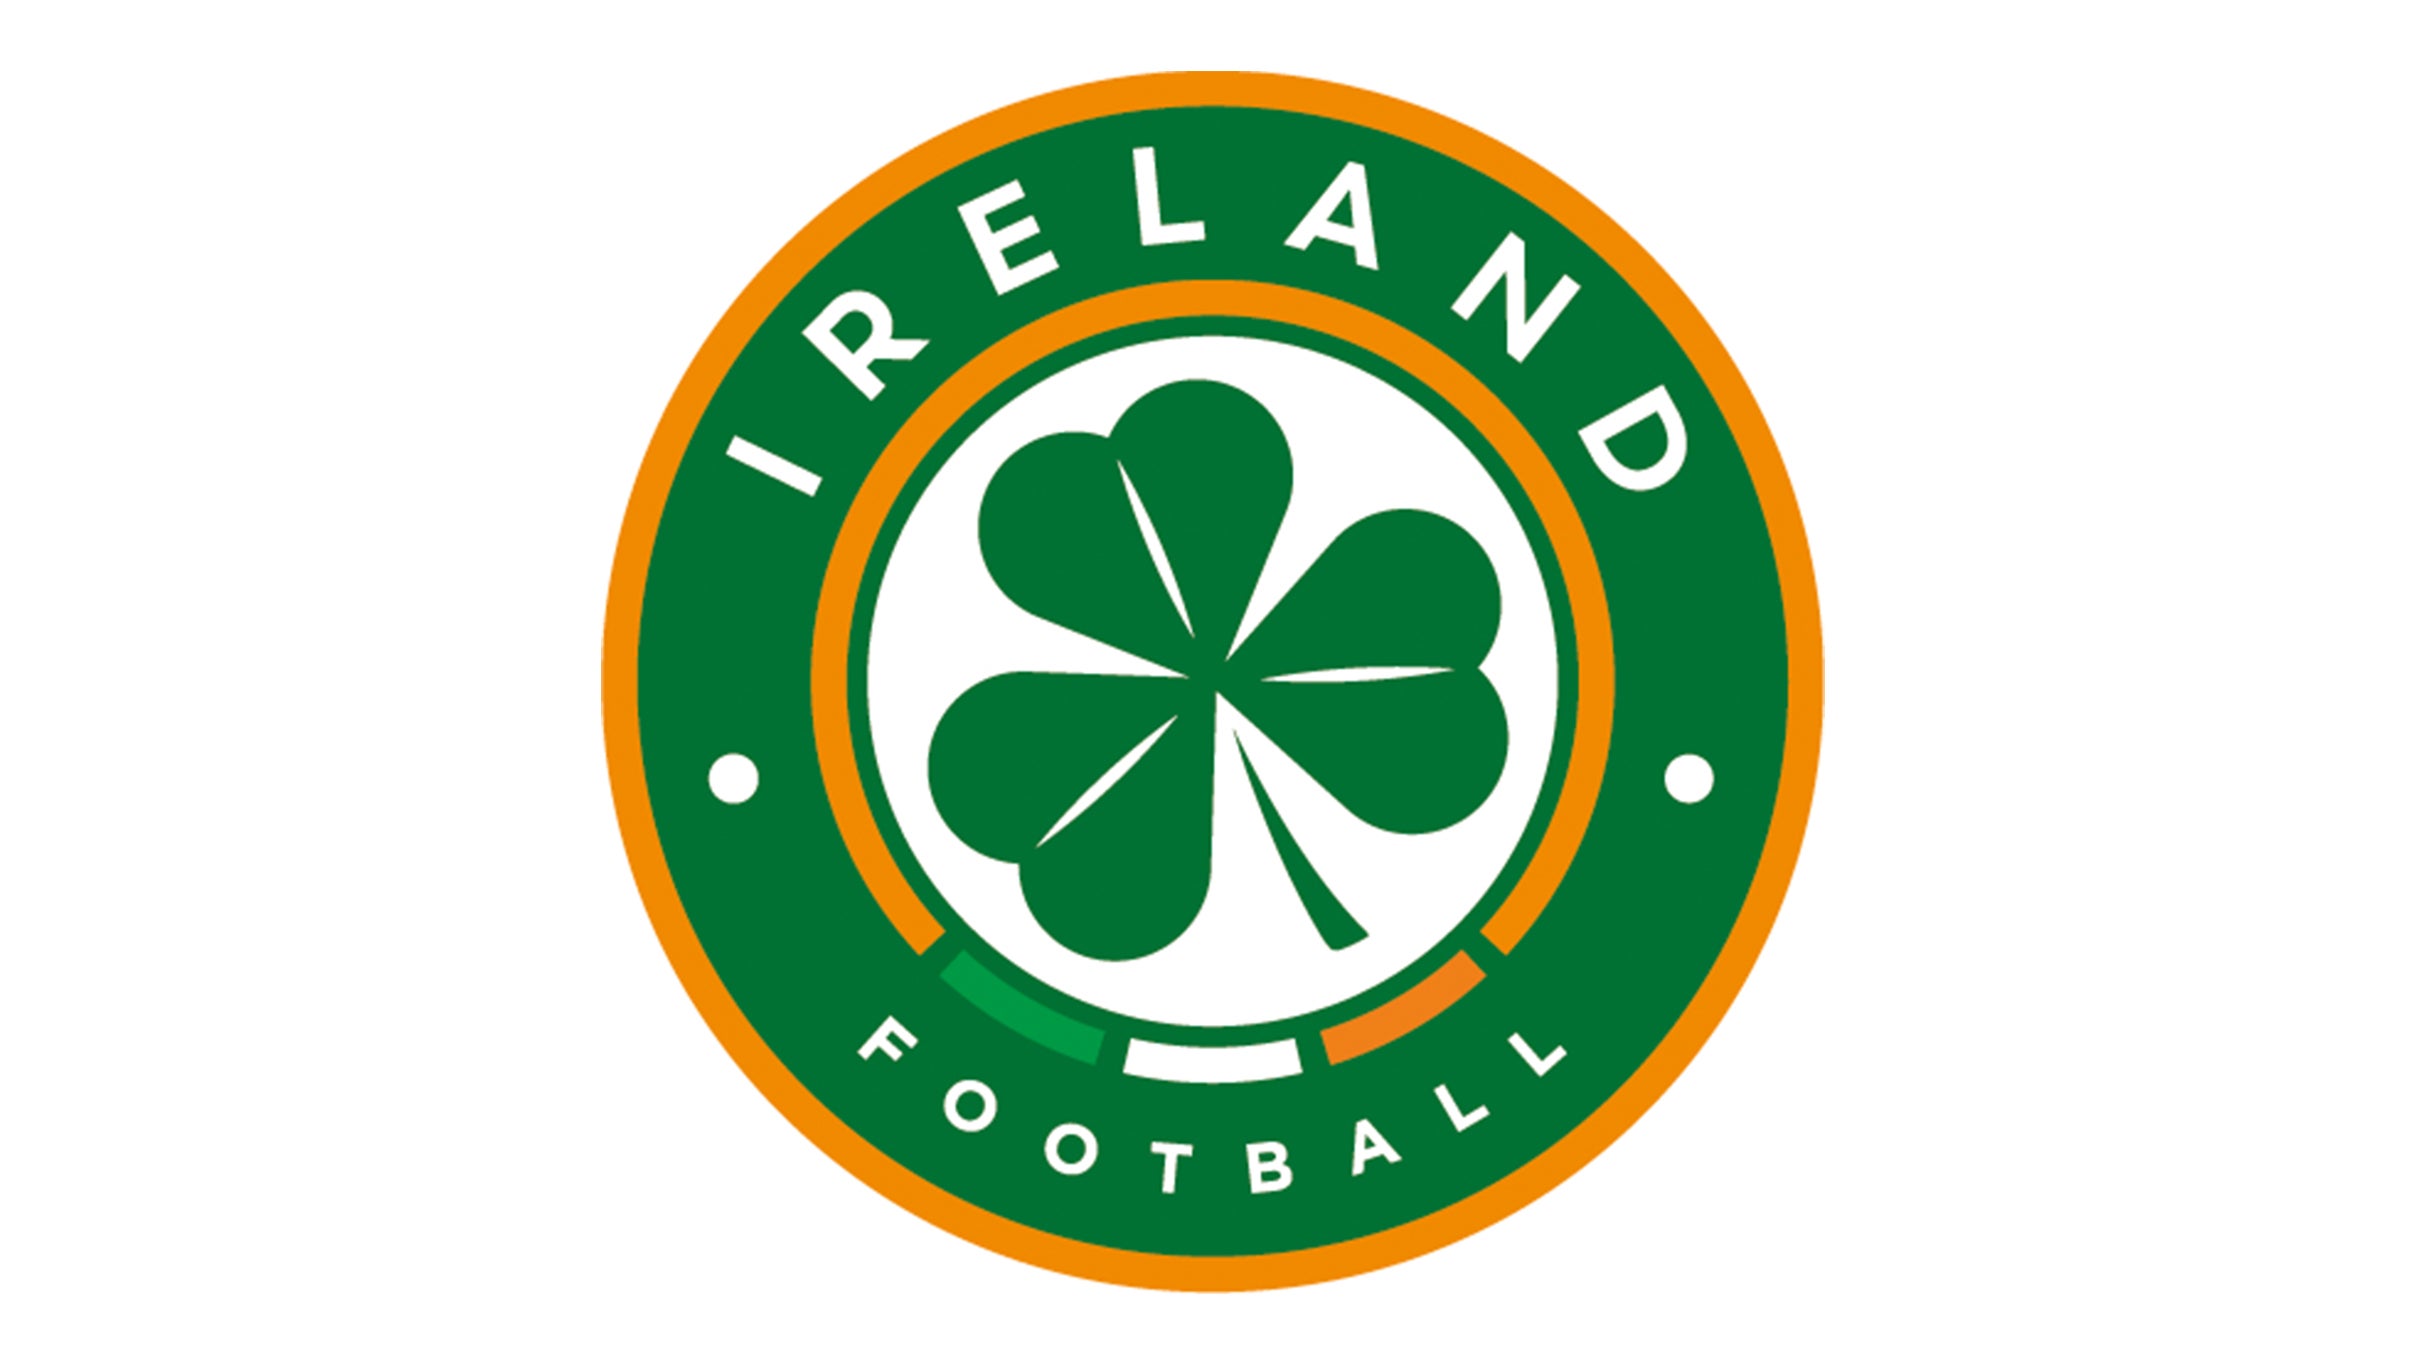 International Friendly - Republic of Ireland V Hungary in Dublin promo photo for Club Ireland presale offer code